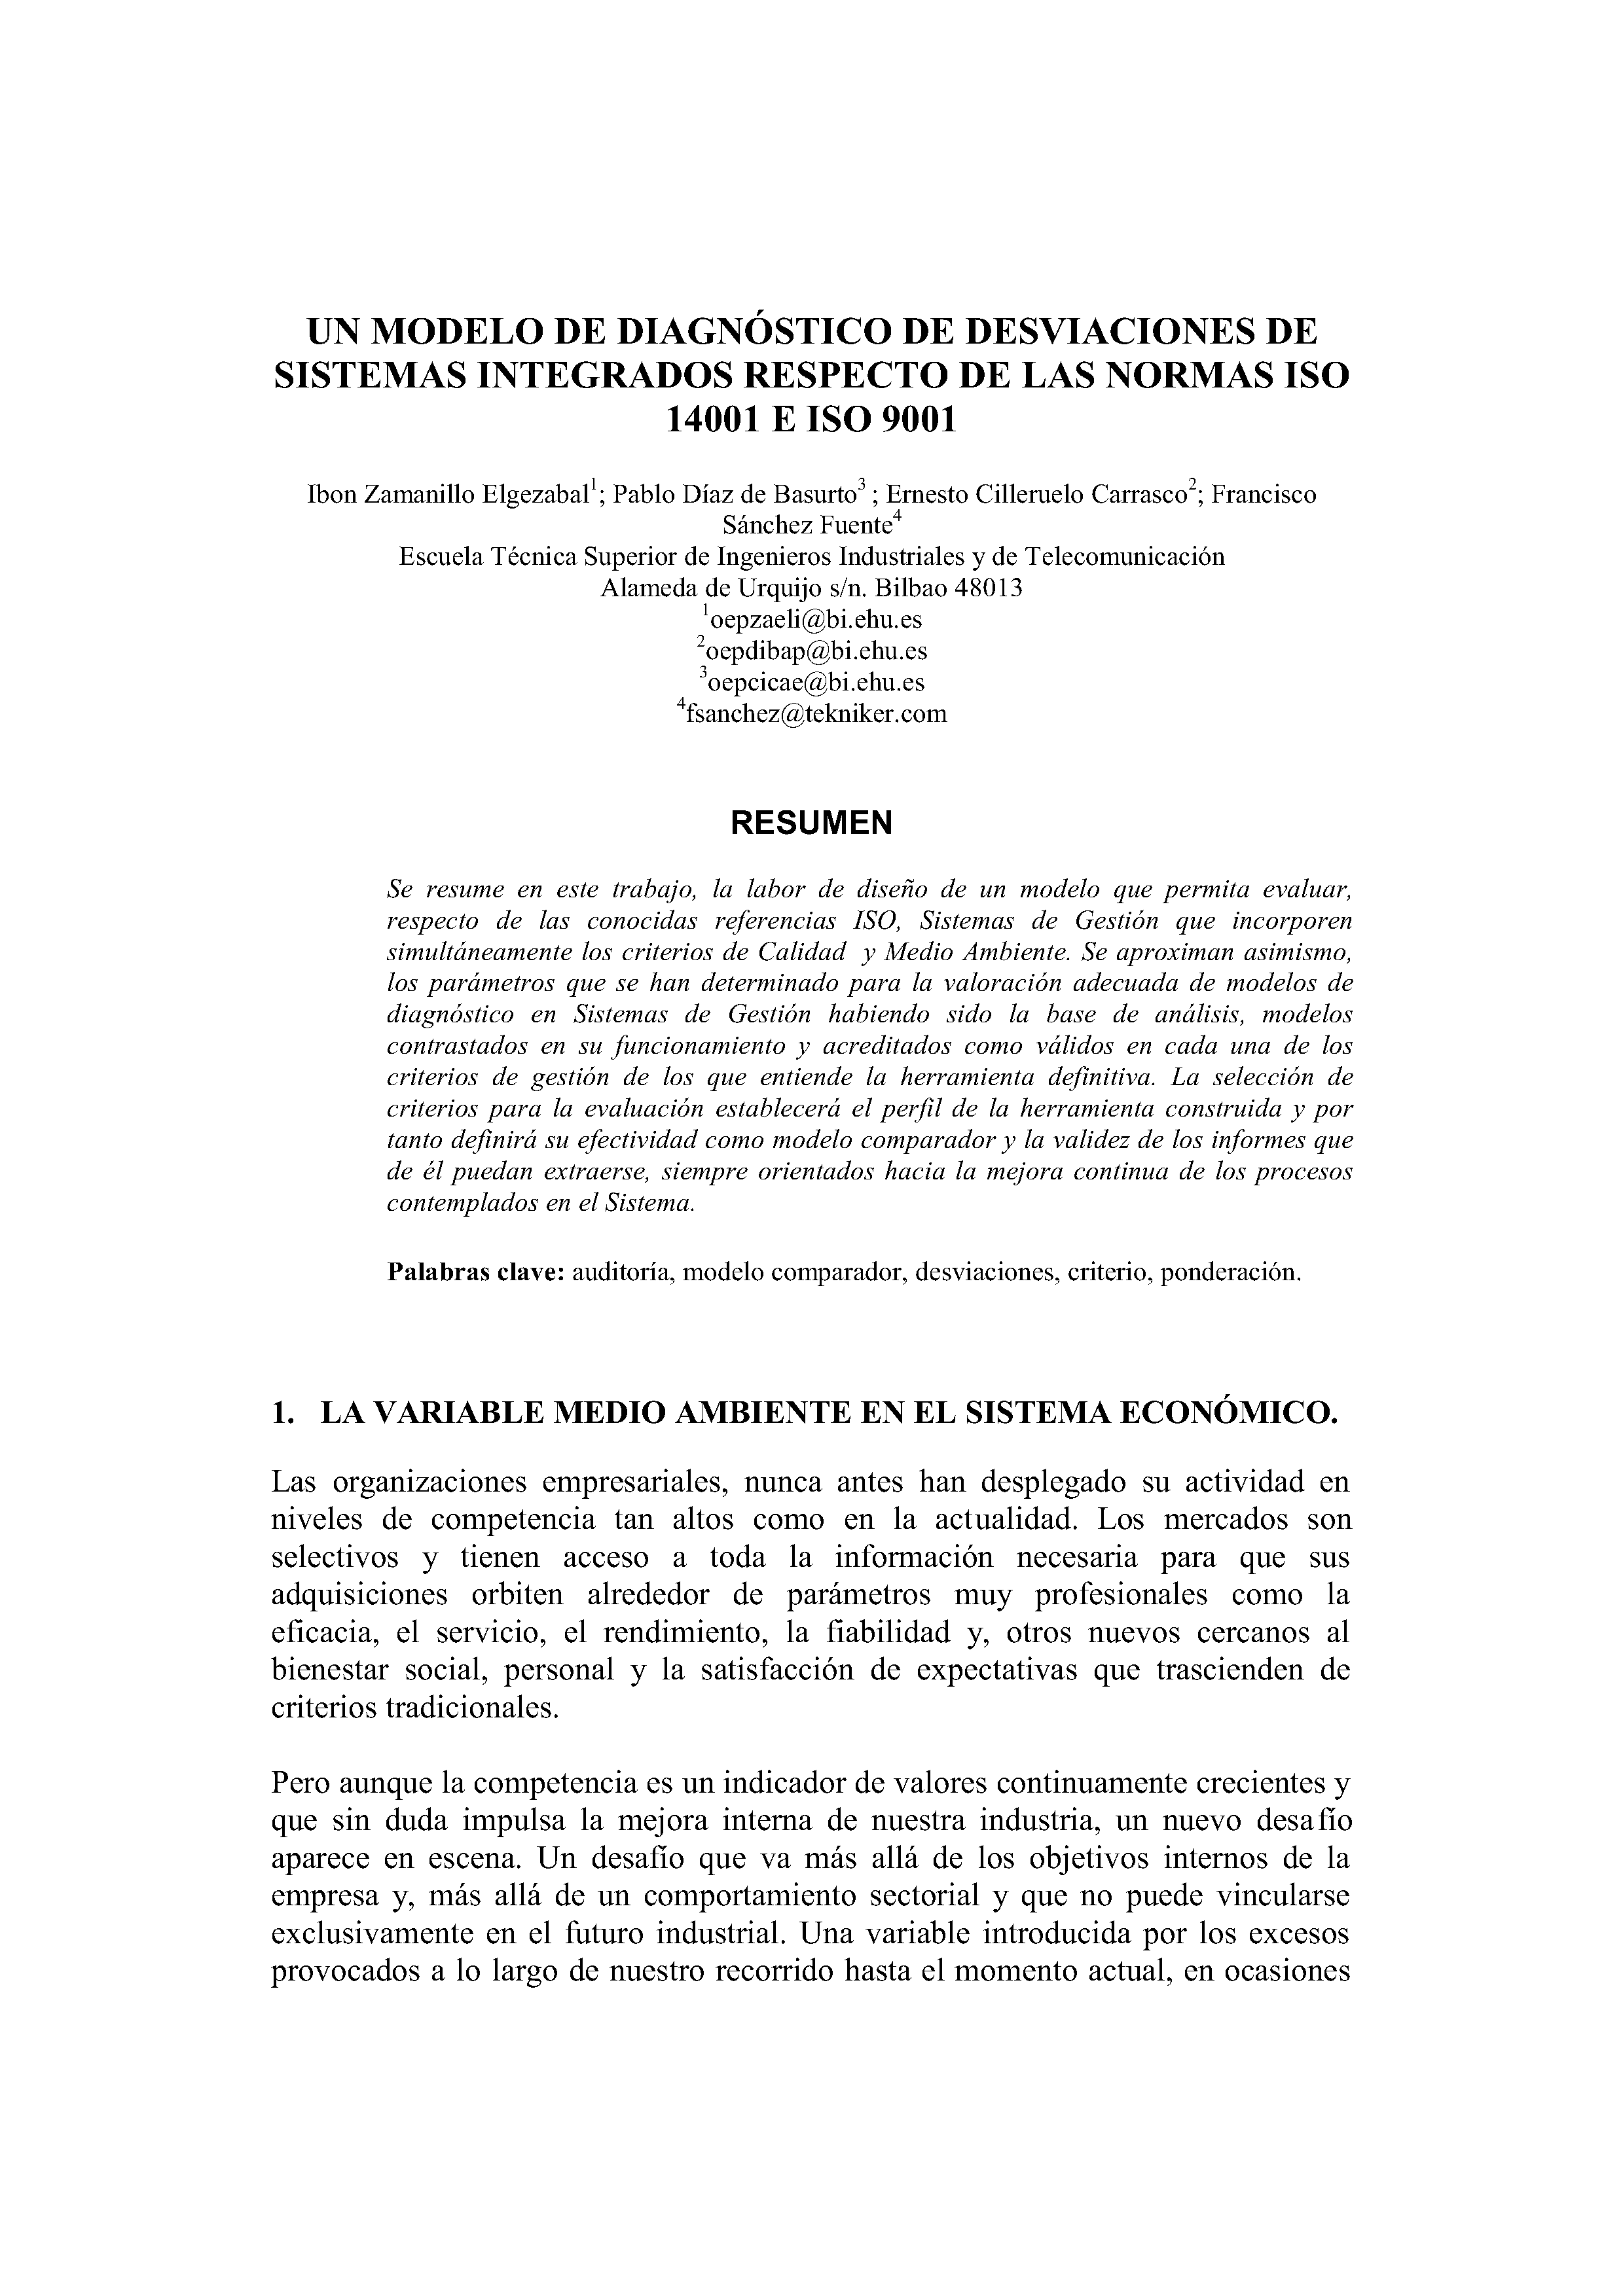 UN MODELO DE DIAGNÓSTICO DE DESVIACIONES DE SISTEMAS INTEGRADOS RESPECTO DE LAS NORMAS ISO 14001 E ISO 9001